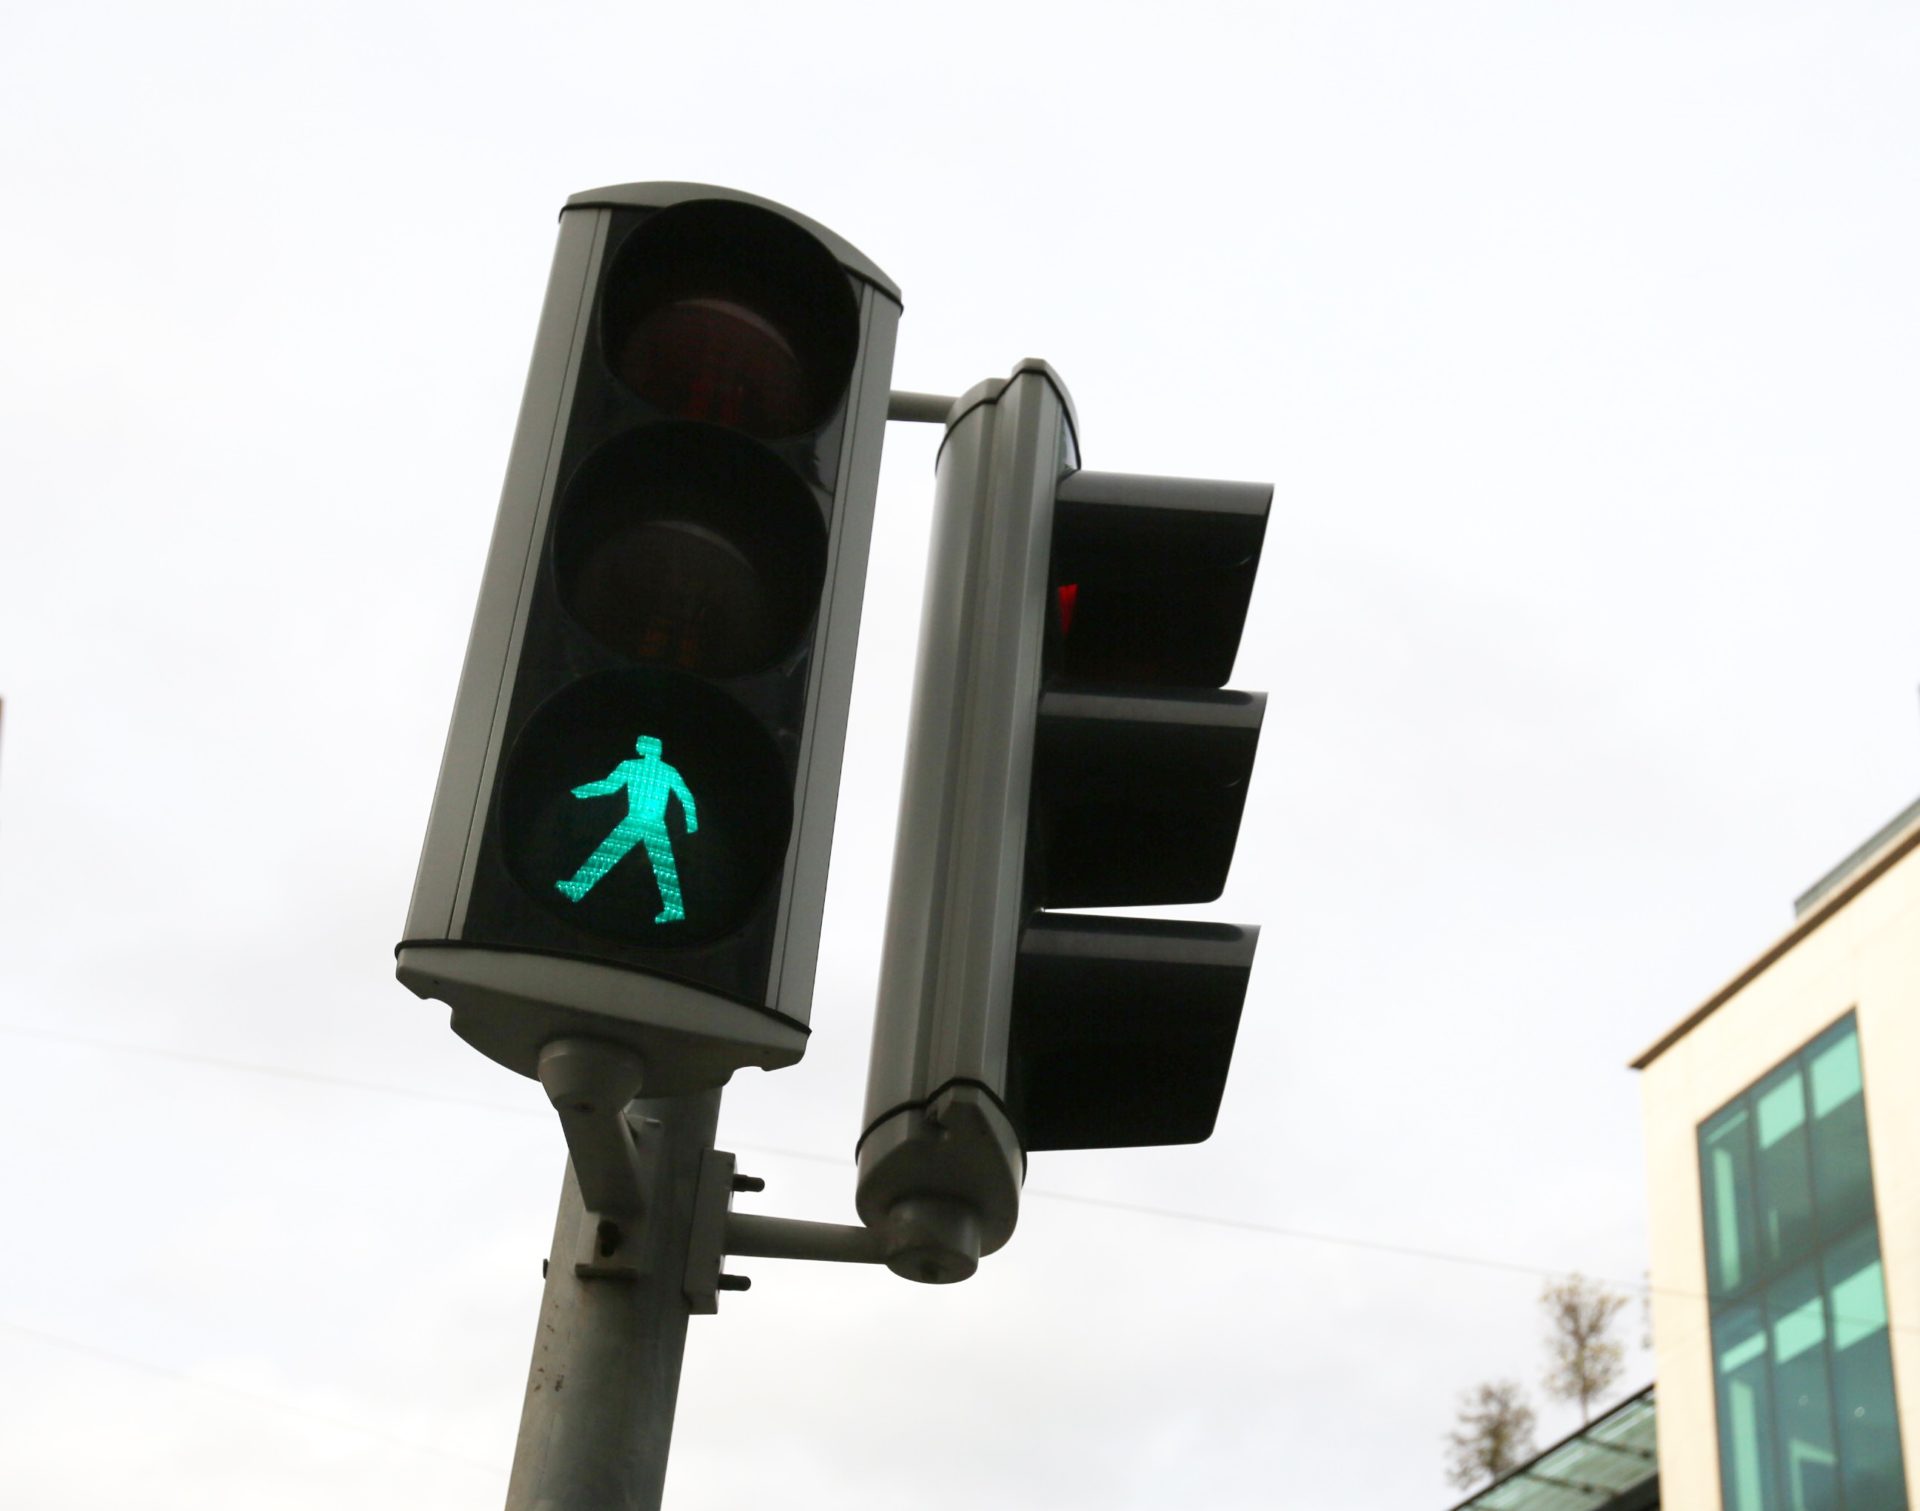 A green man traffic light in Dublin city